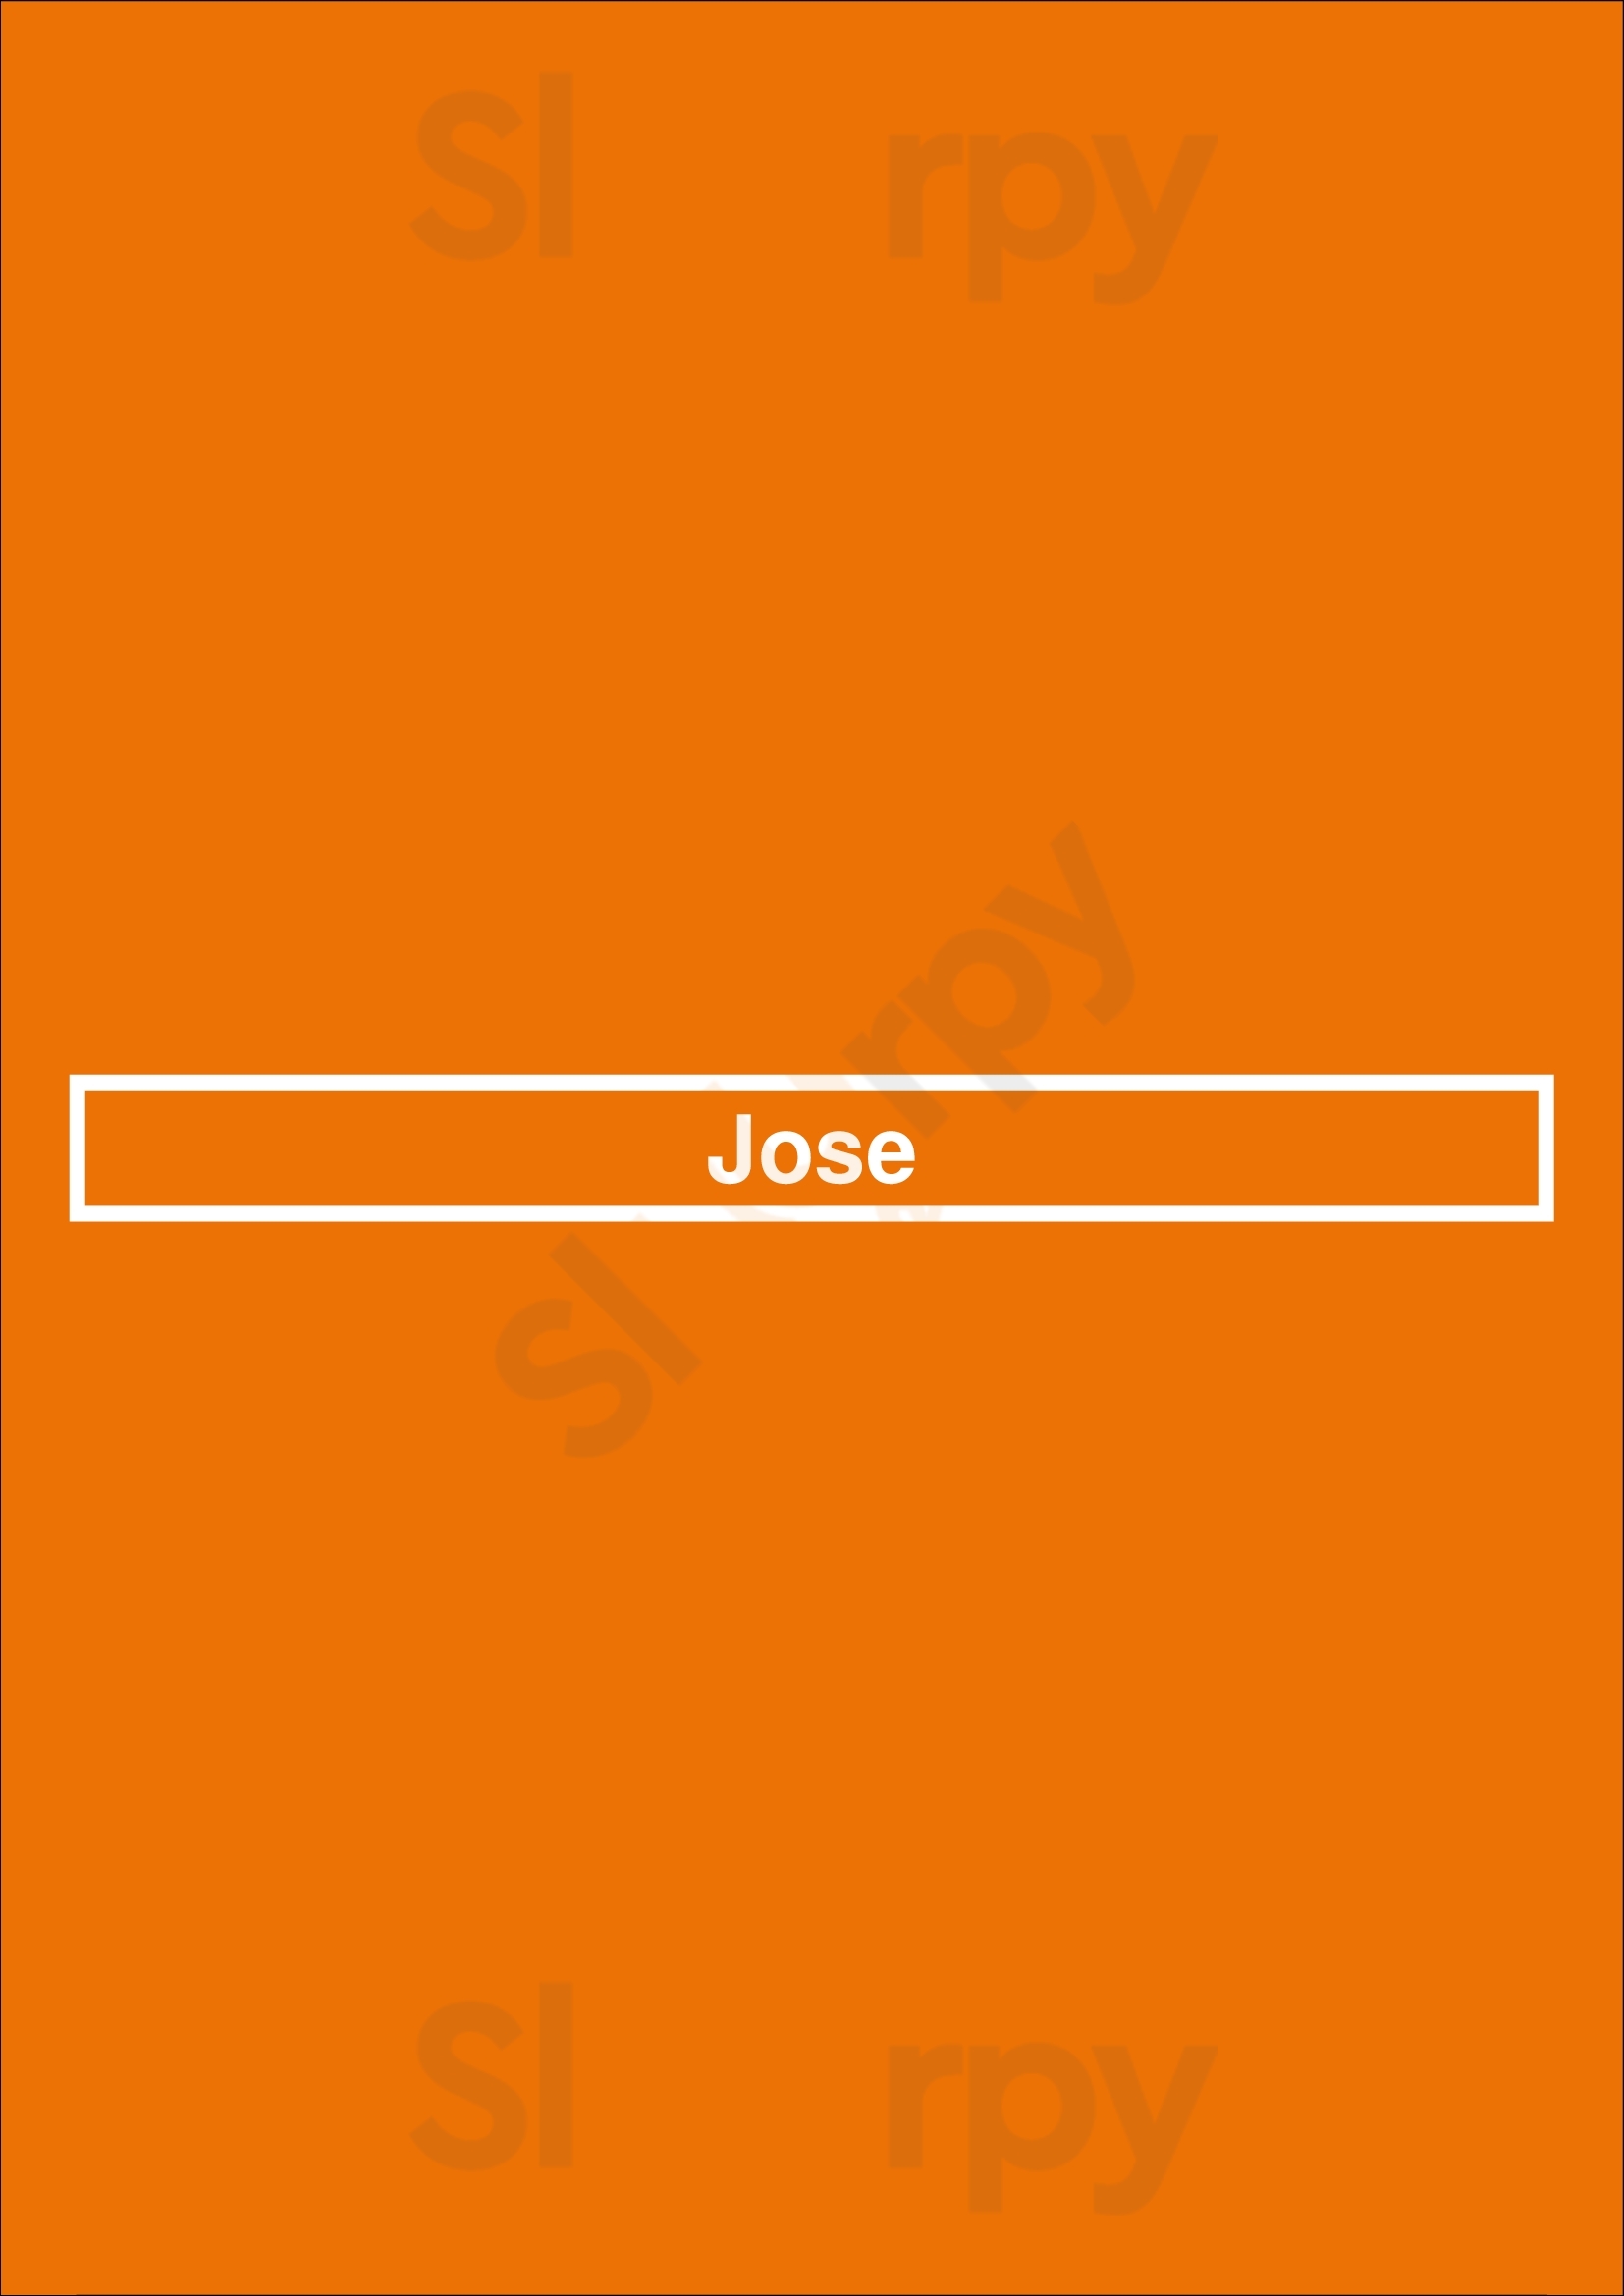 Jose Dallas Menu - 1